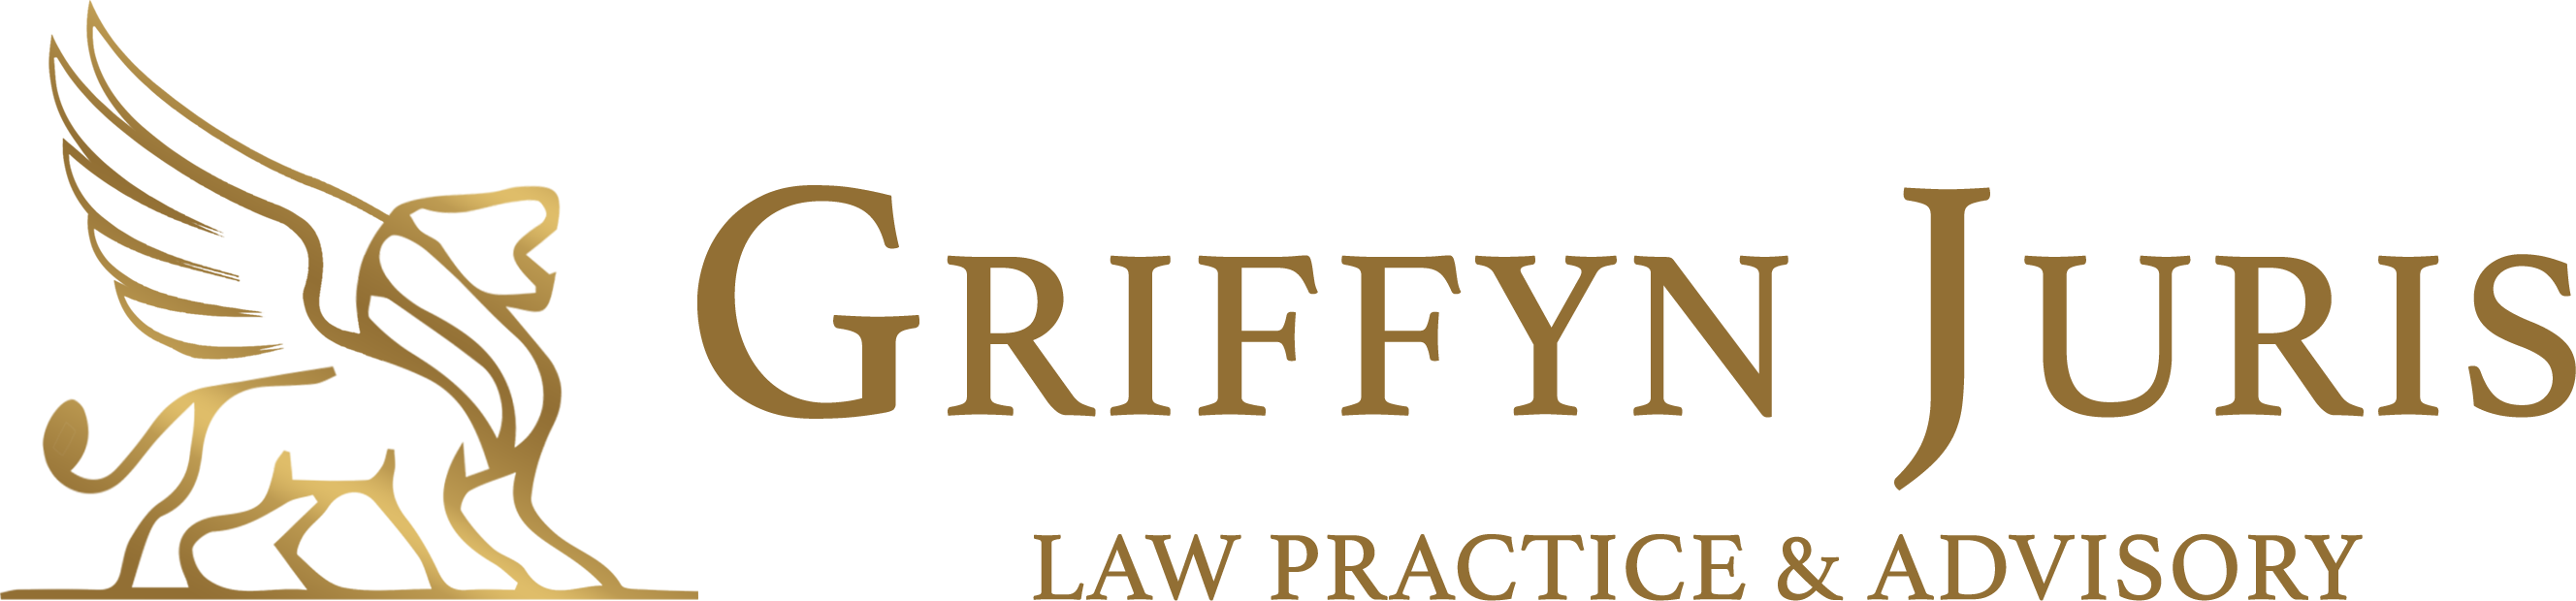 Griffyn Juris - Corporate Law Practice & Advisory